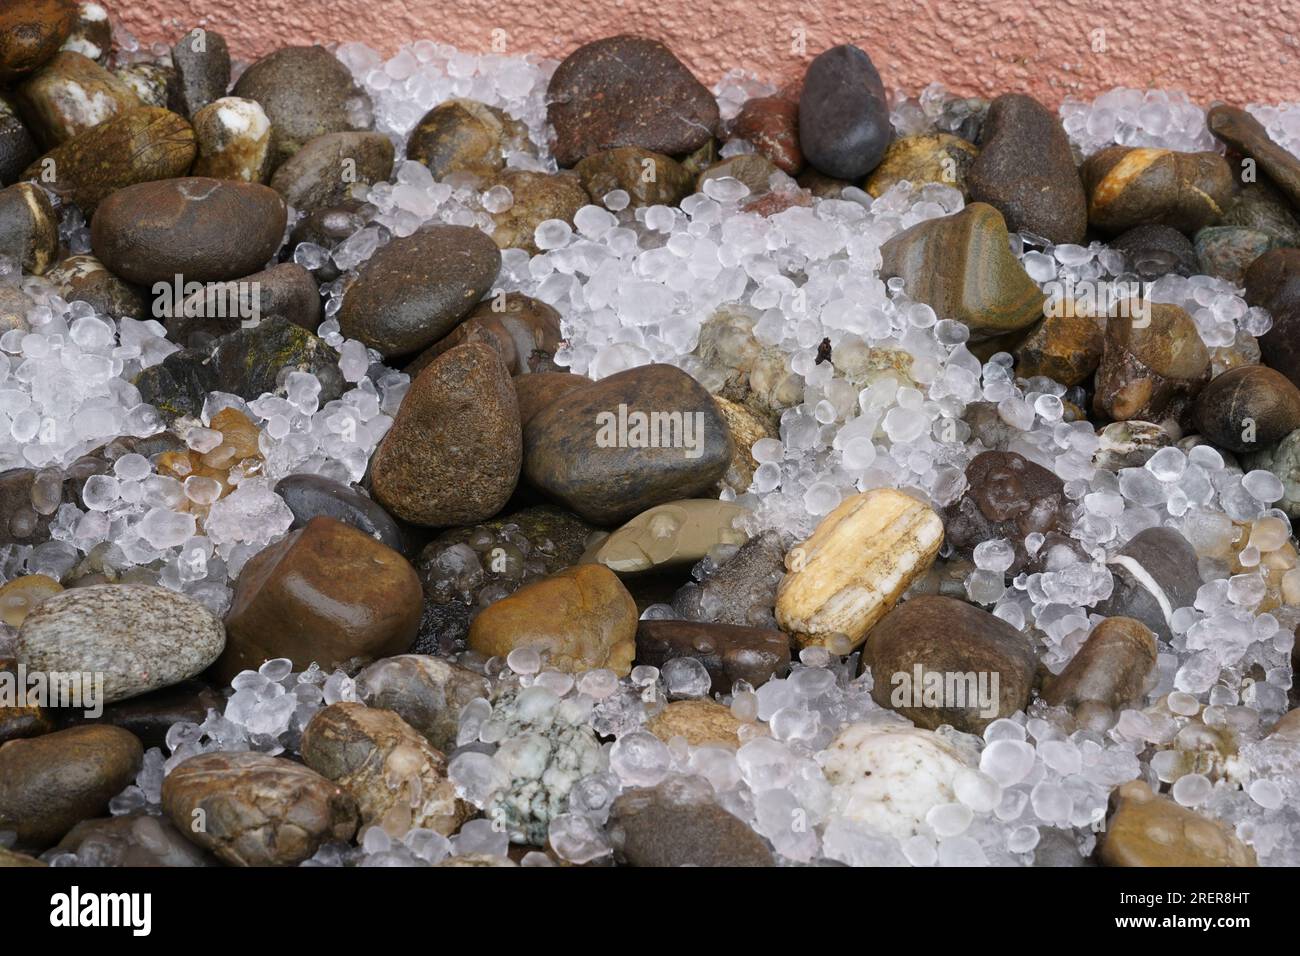 Hailstones spread on the ground with decorative stones. Stock Photo